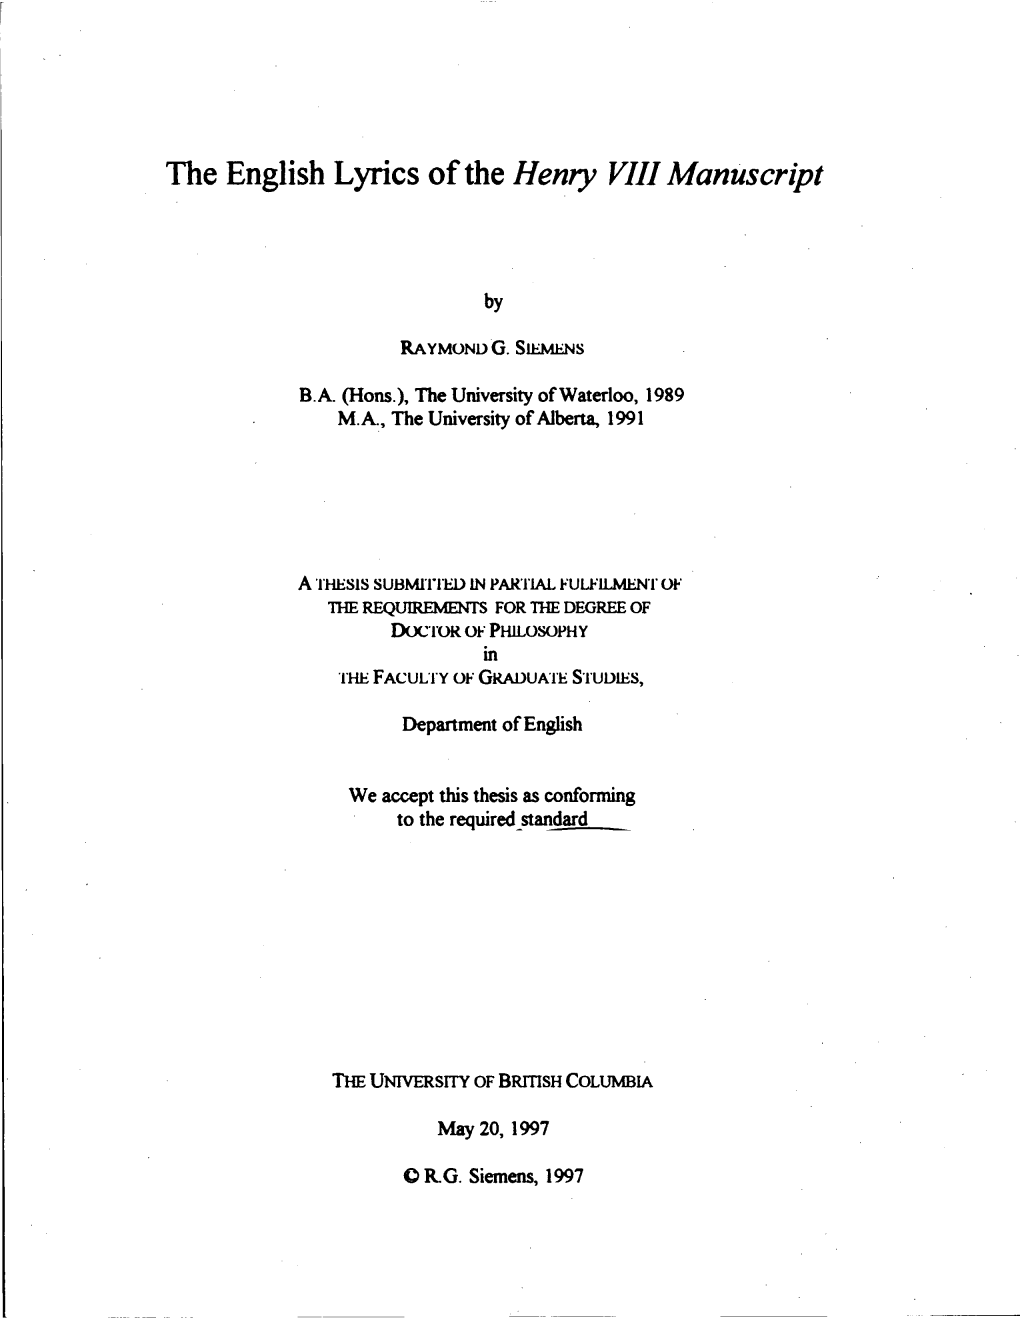 The English Lyrics of the Henry VIII Manuscript